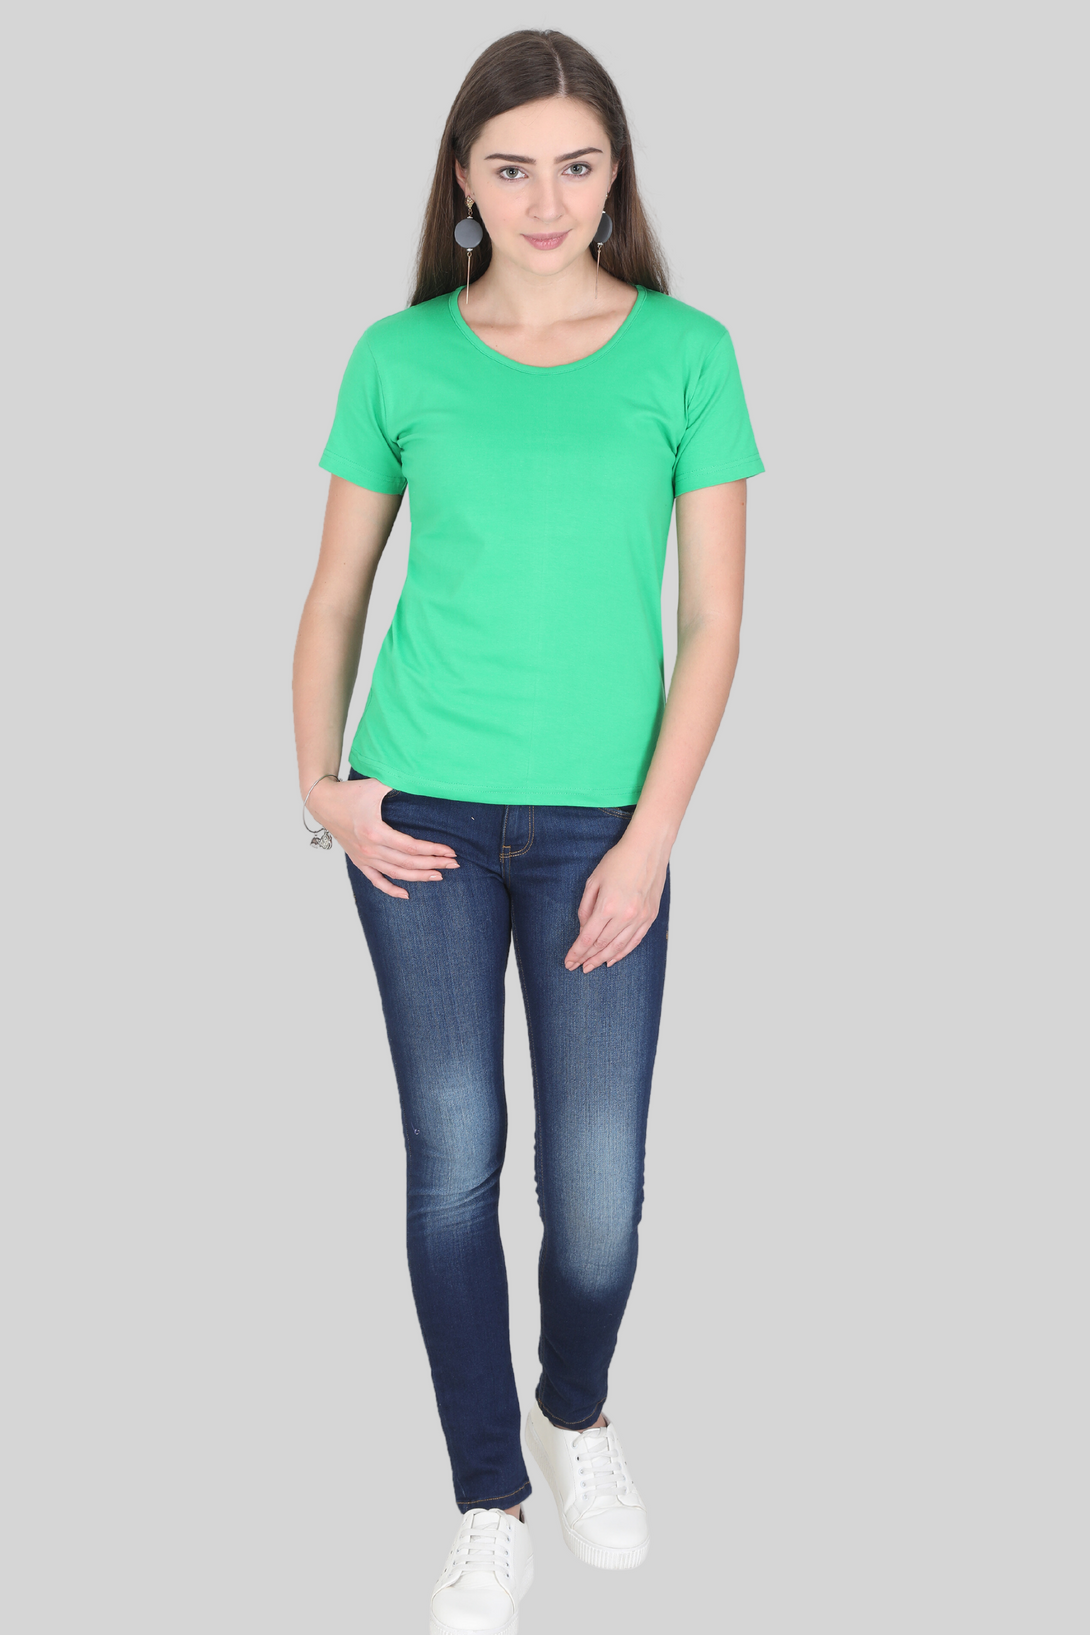 Flag Green Scoop Neck T-Shirt For Women - WowWaves - 6